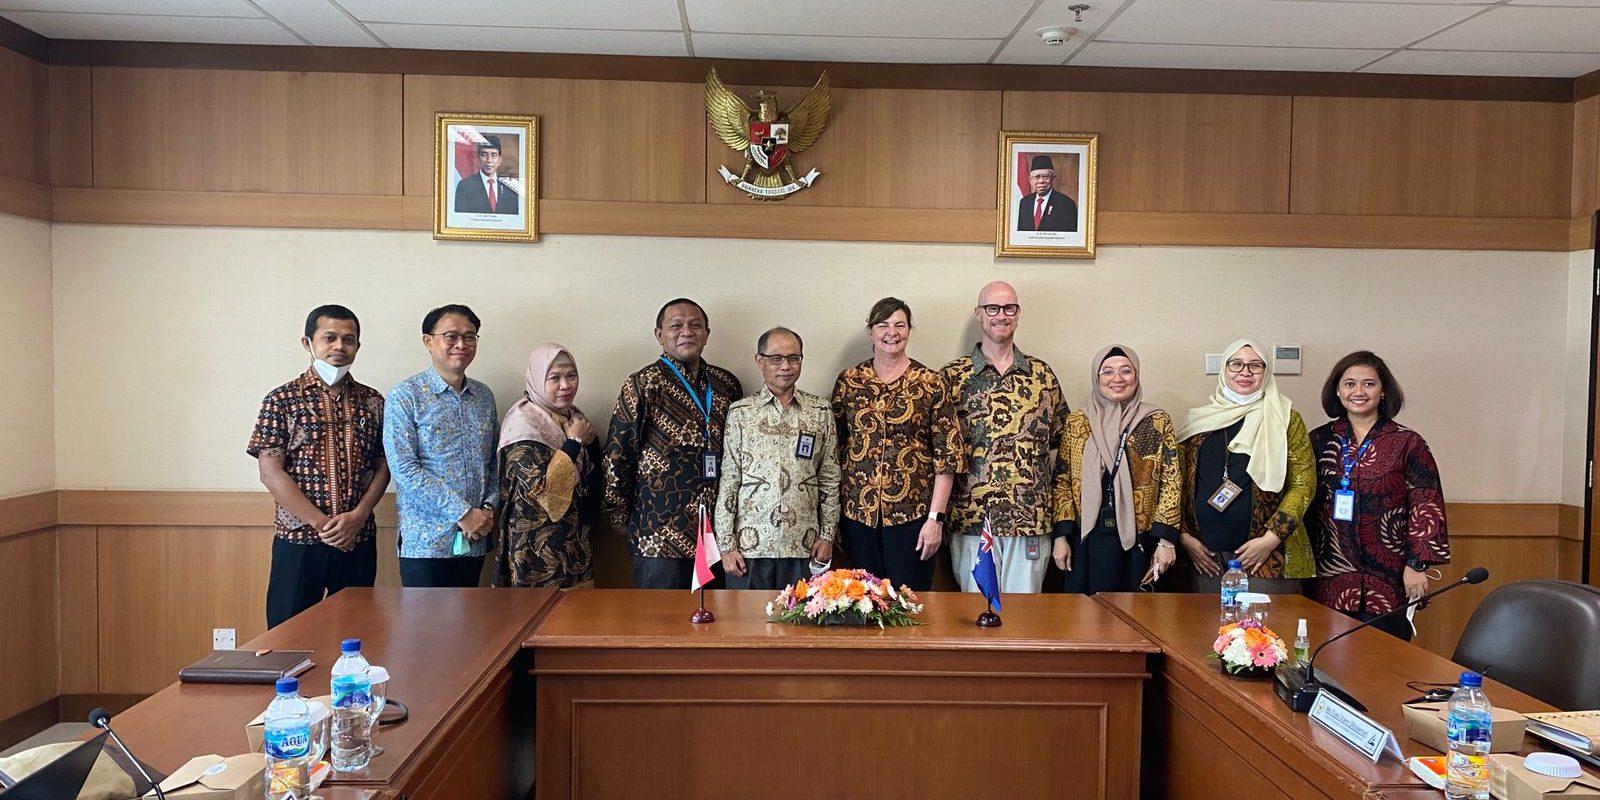 Australian National Audit Office (ANAO) berdiskusi mengenai "quality assurance (QA) review on financial audit report of International Atomic Energy Agency" (IAEA) dengan Badan Pemeriksa Keuangan (BPK), beberapa waktu lalu. Diskusi dilakukan secara tatap muka di kantor pusat BPK di Jakarta.